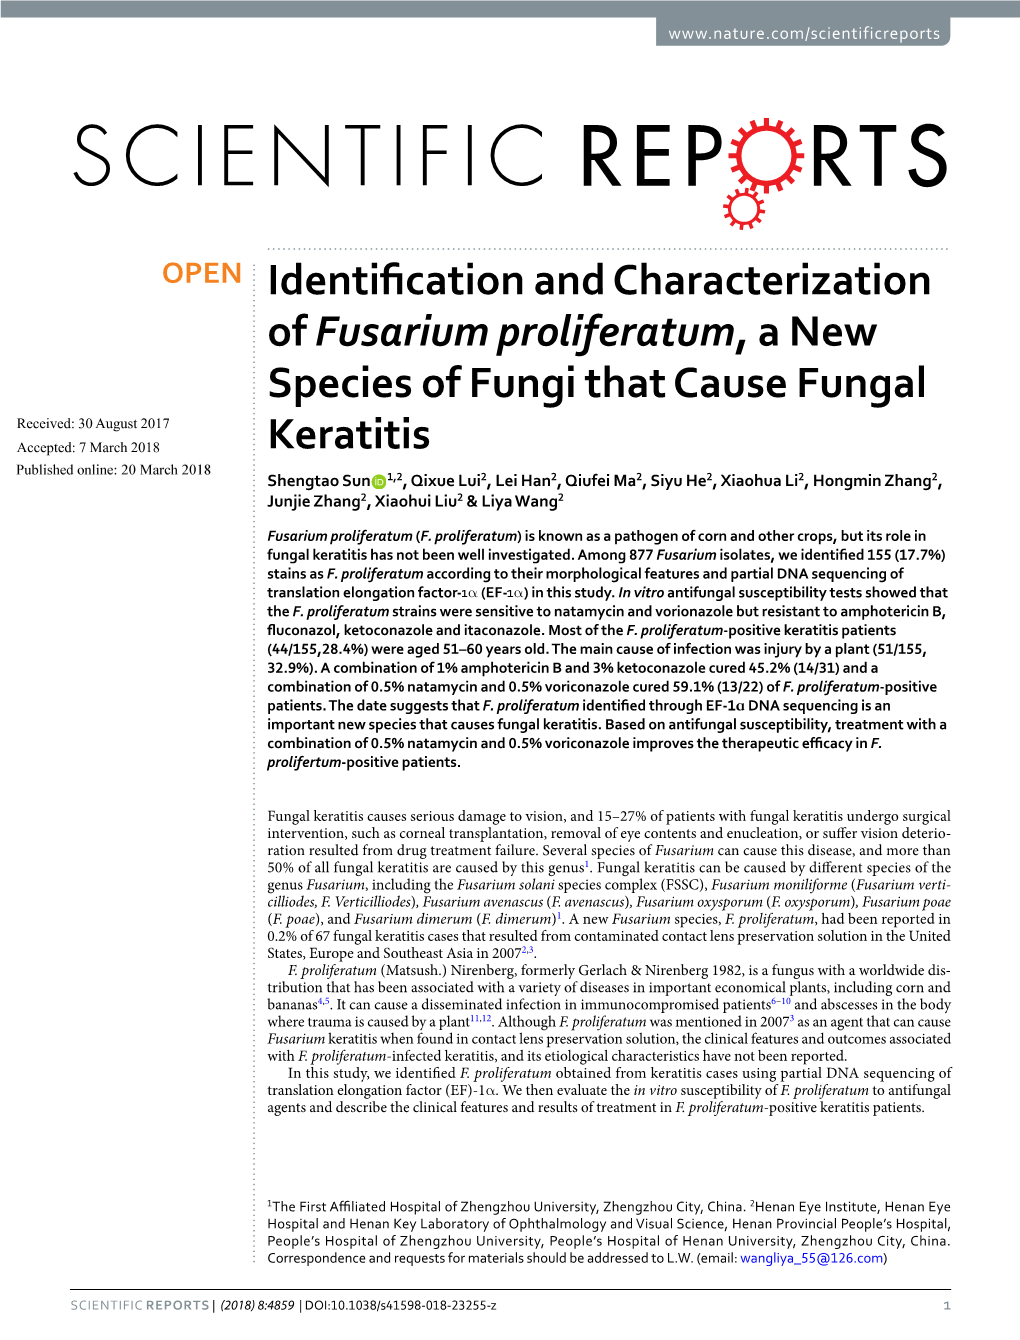 Identification and Characterization of Fusarium Proliferatum, a New